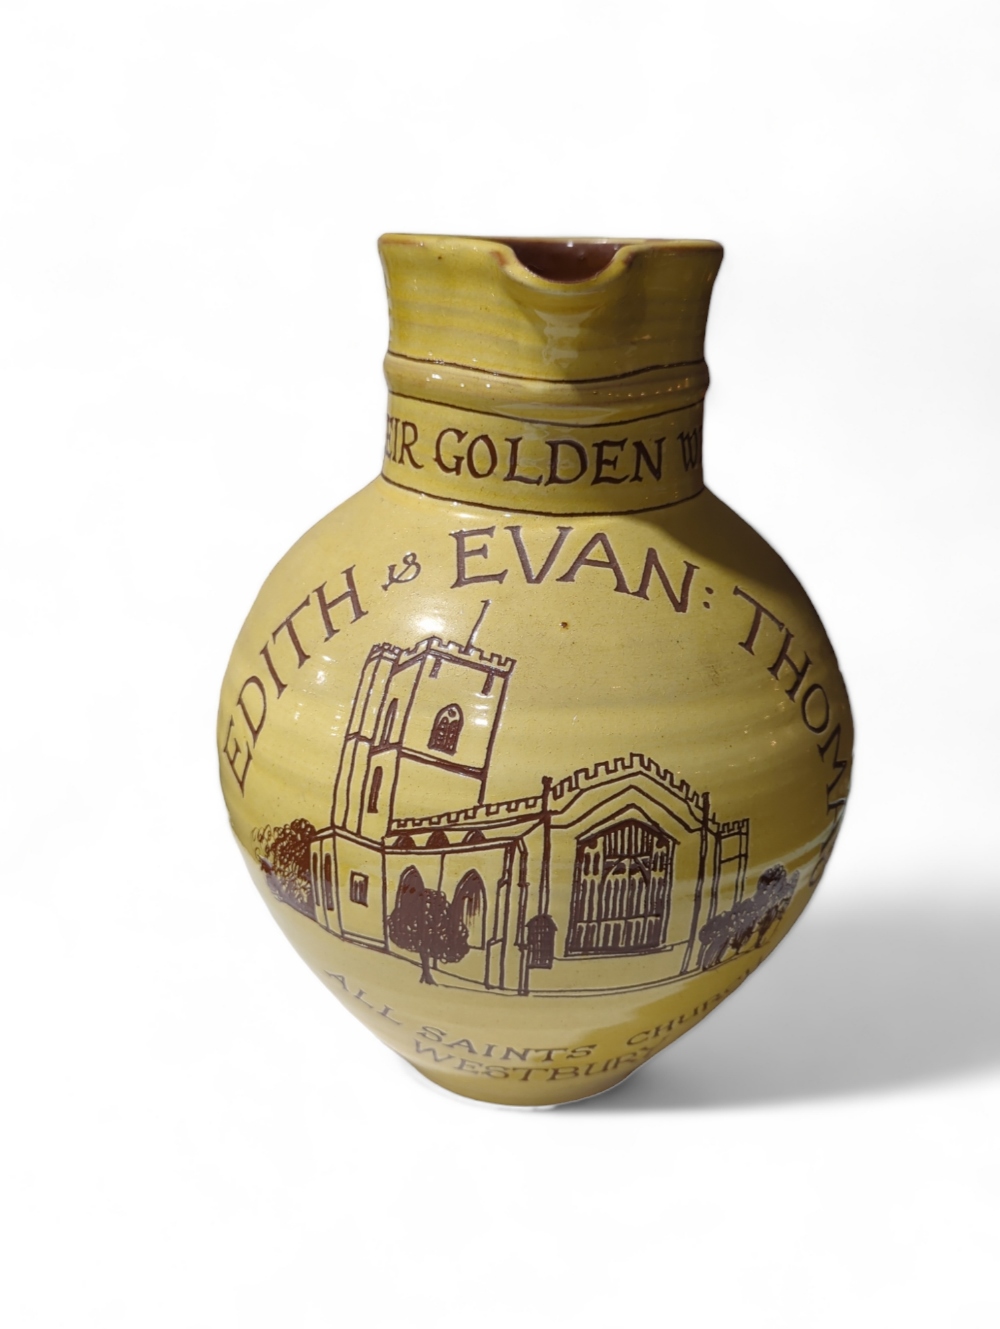 A Golden Wedding celebration jug, terracotta with - Image 2 of 4